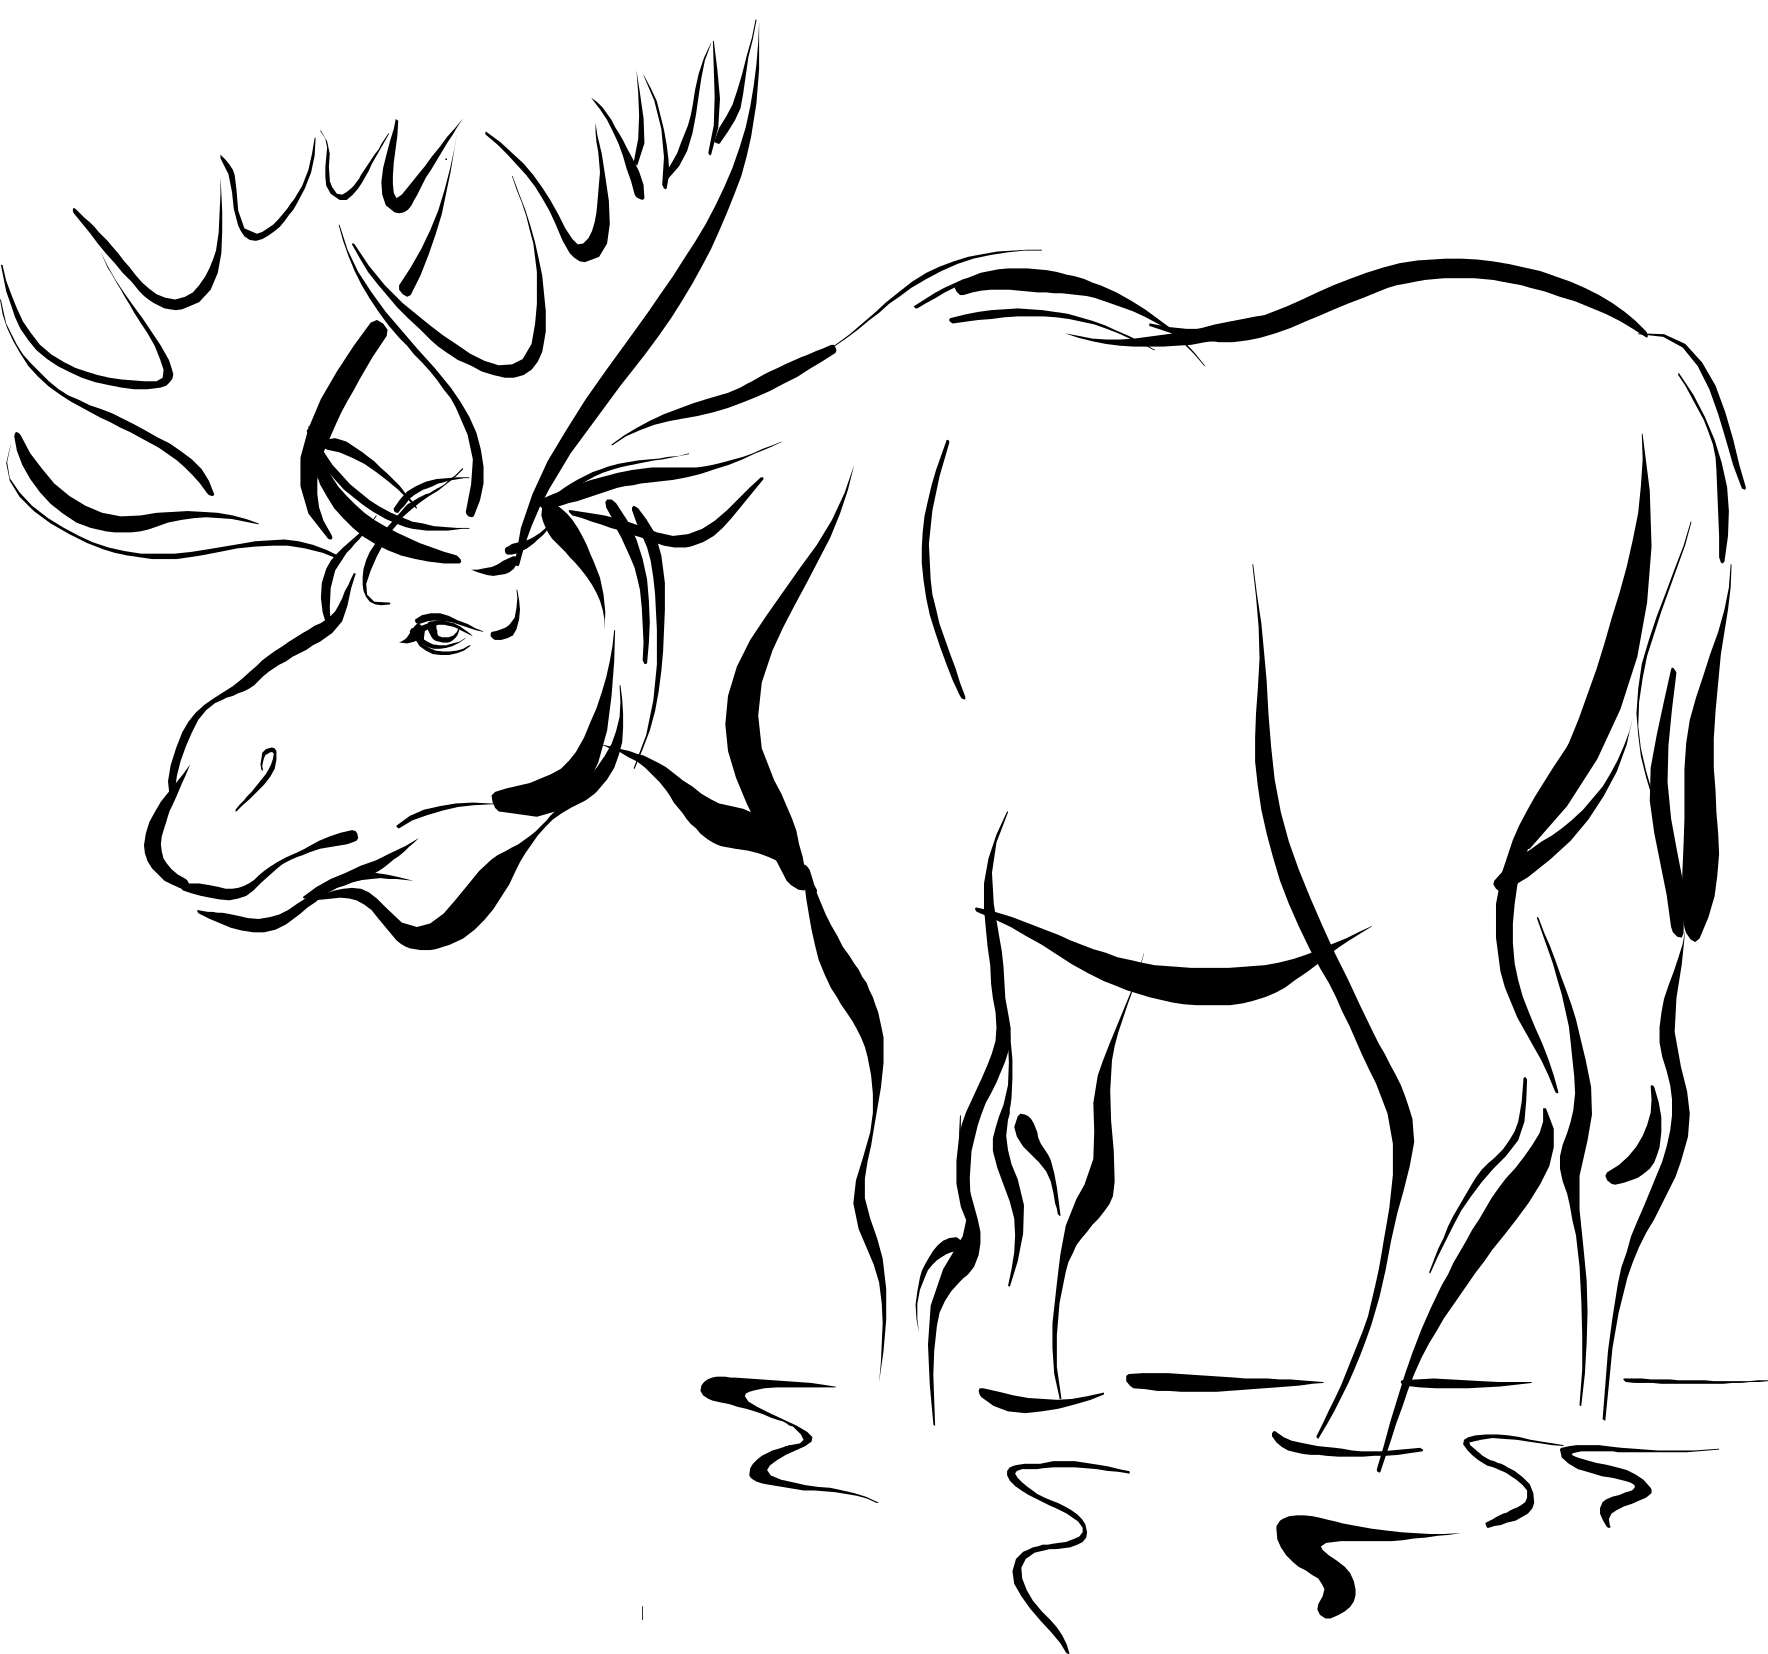 Moose illustration